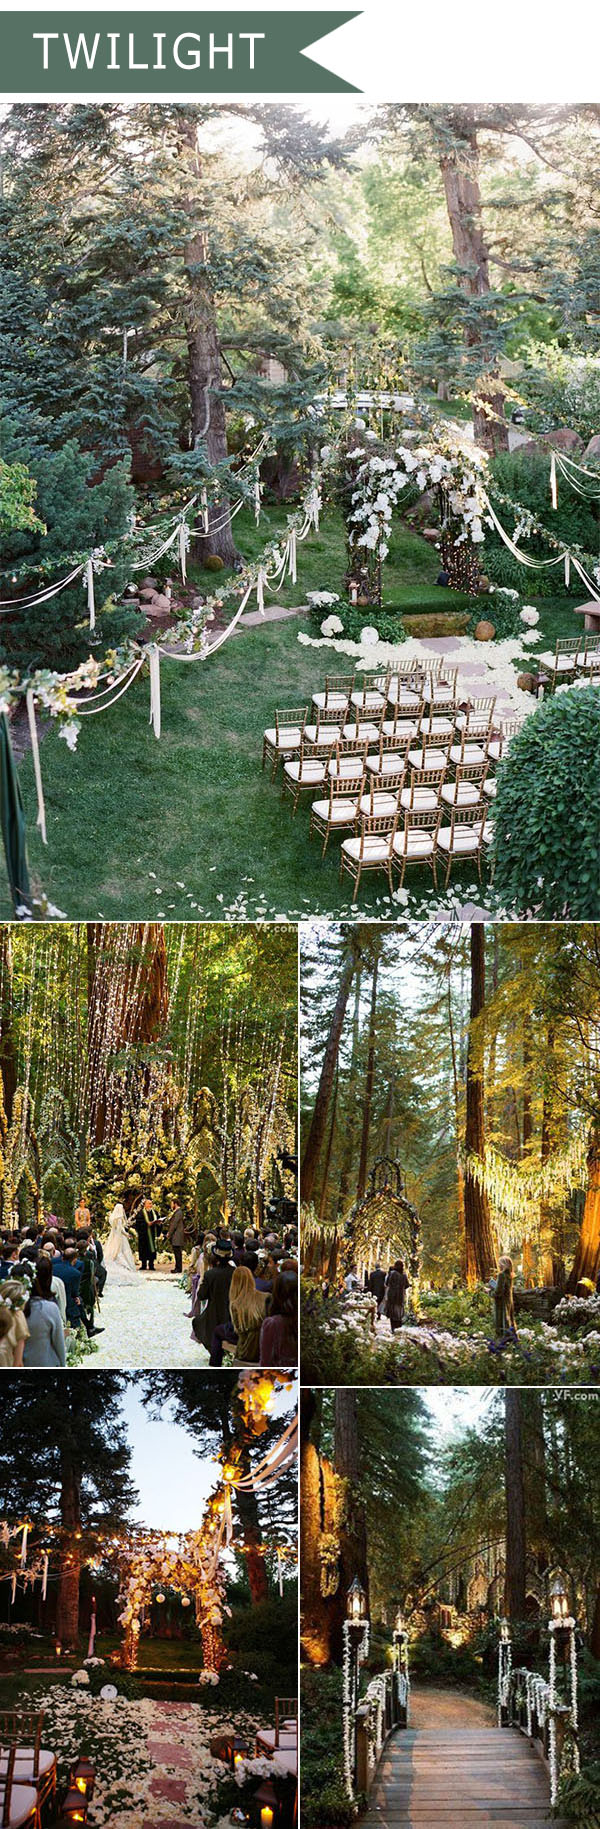 trending-twilight-forest-themed-wedding-ideas